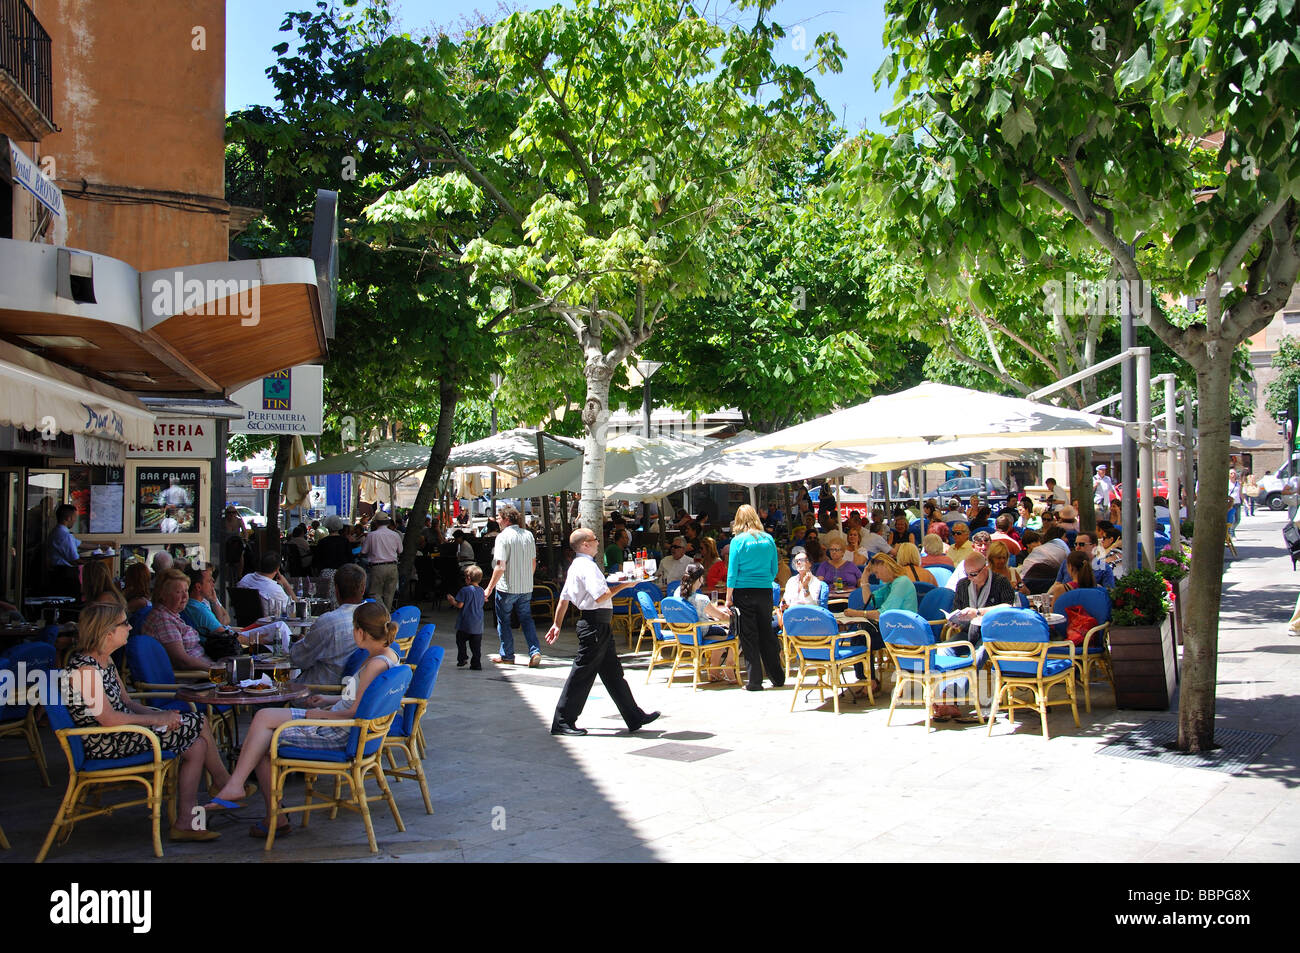 Street cafe, Plaza Reina, Palma de Mallorca, Mallorca, Balearic Islands, Spain Stock Photo